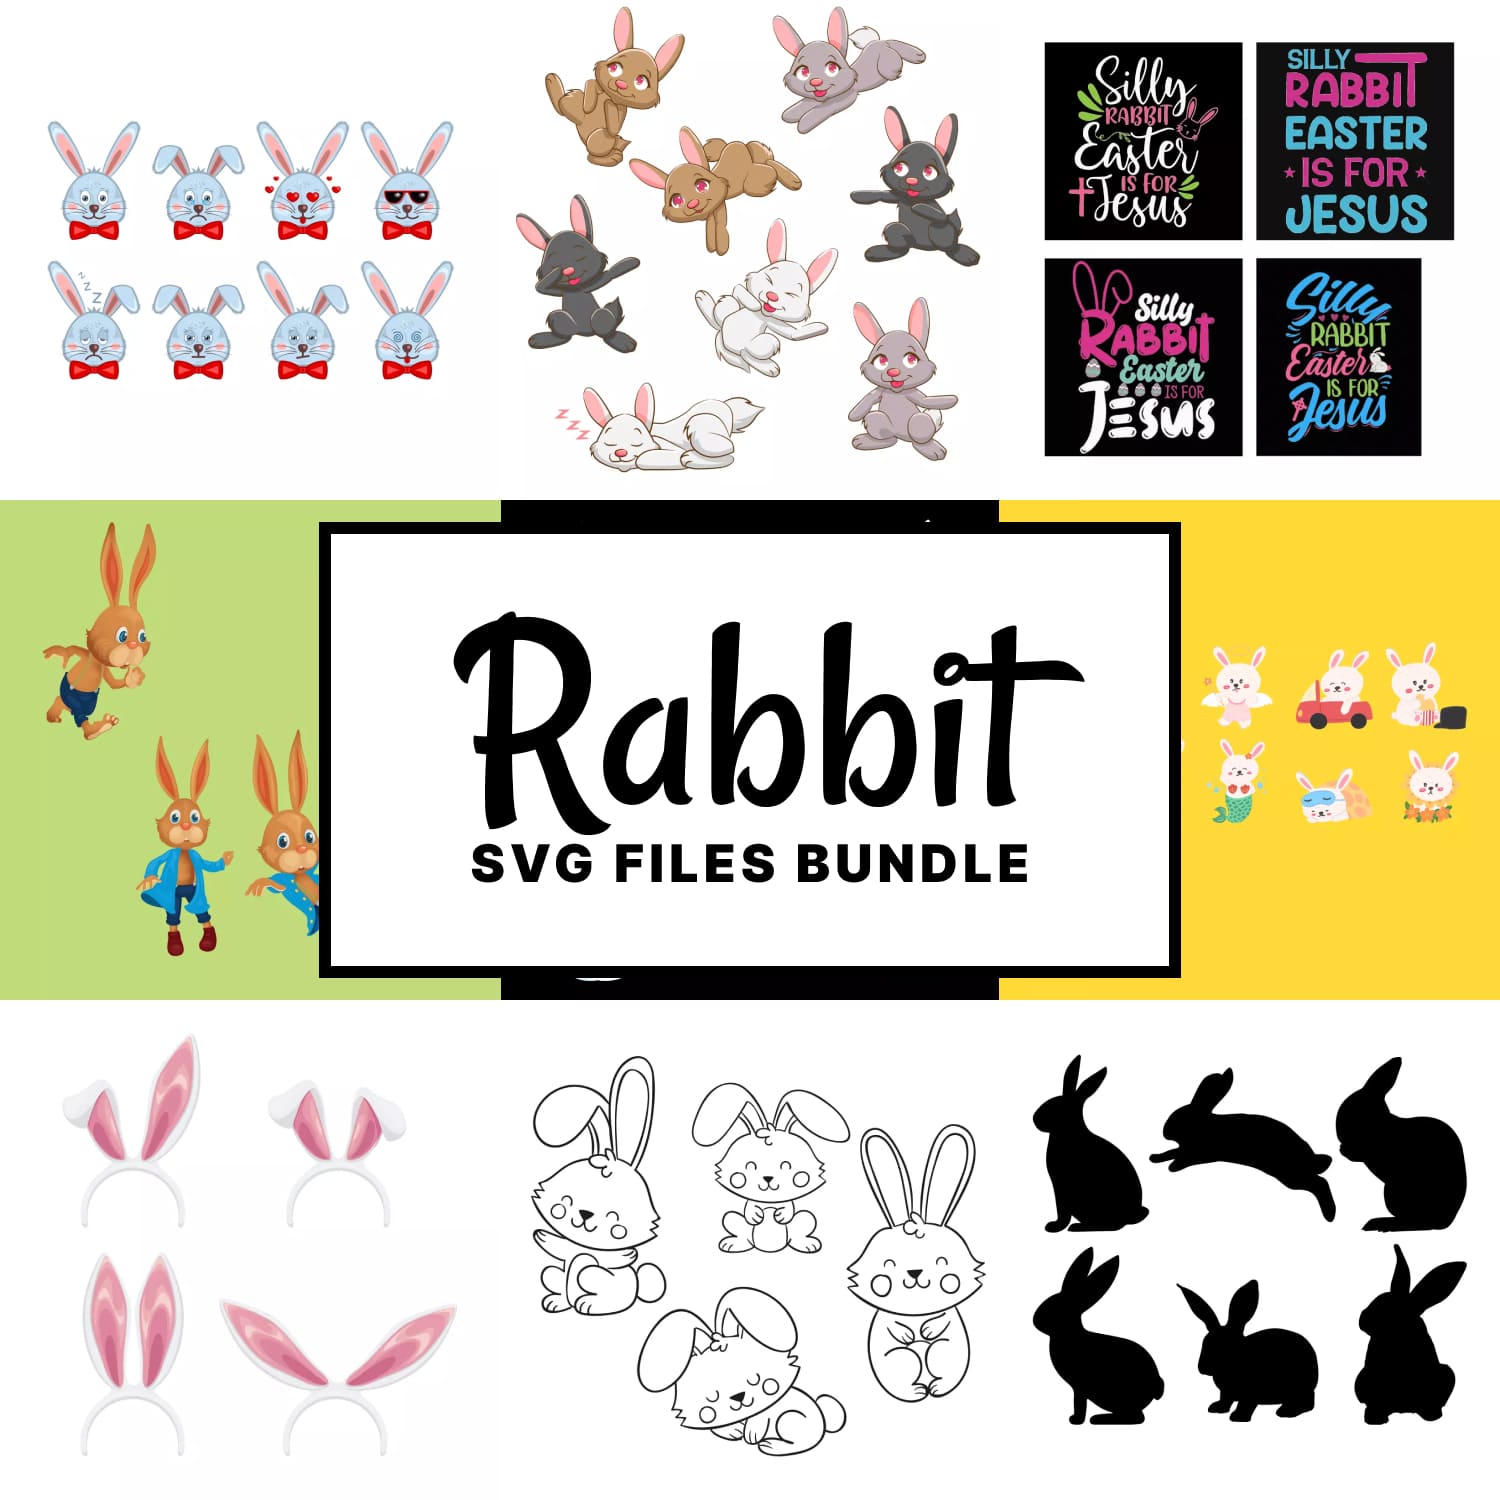 Rabbit svg files bundle.